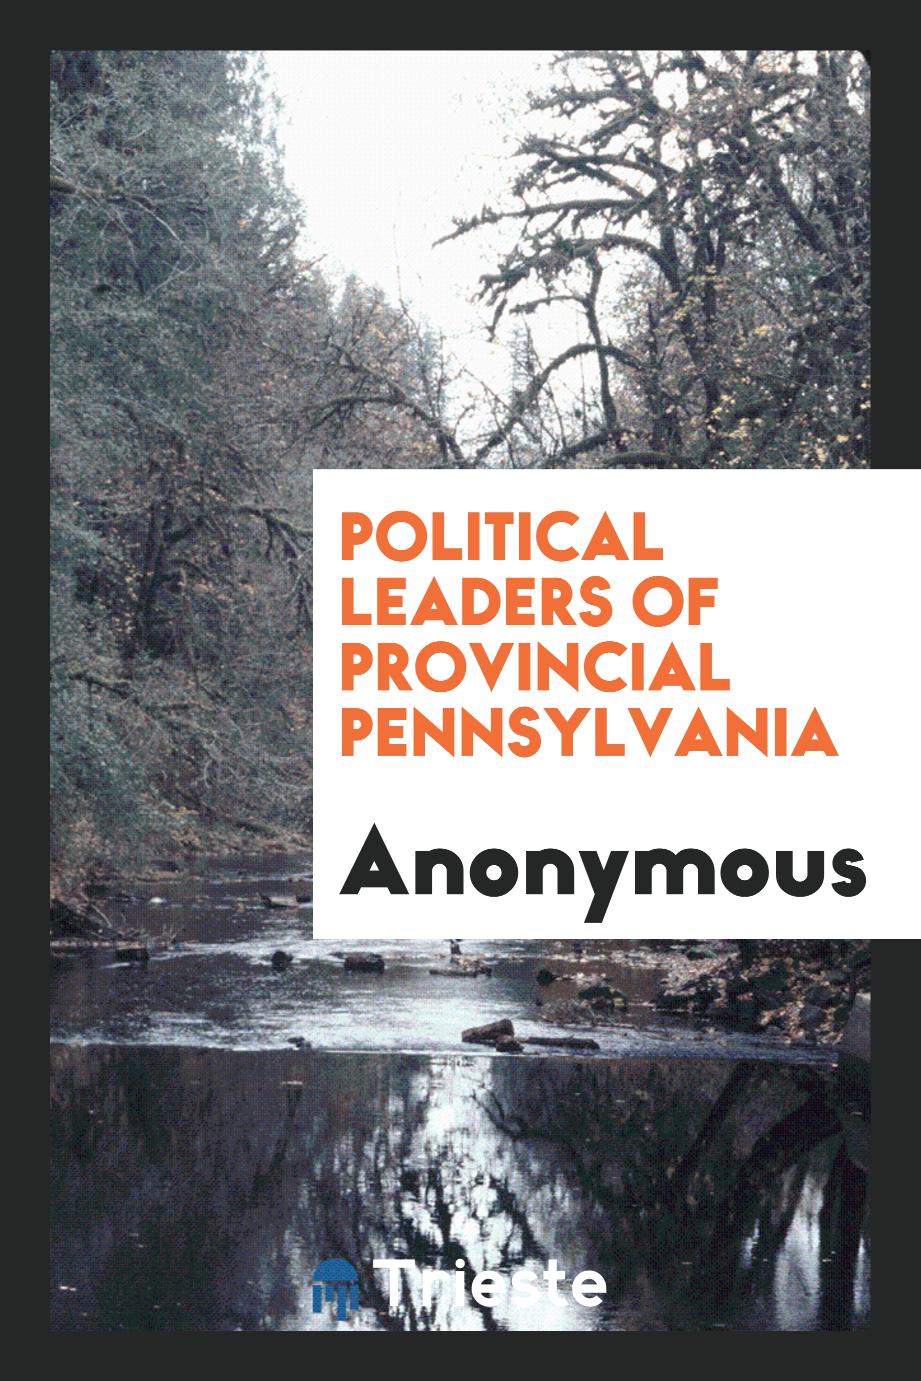 Political leaders of provincial Pennsylvania